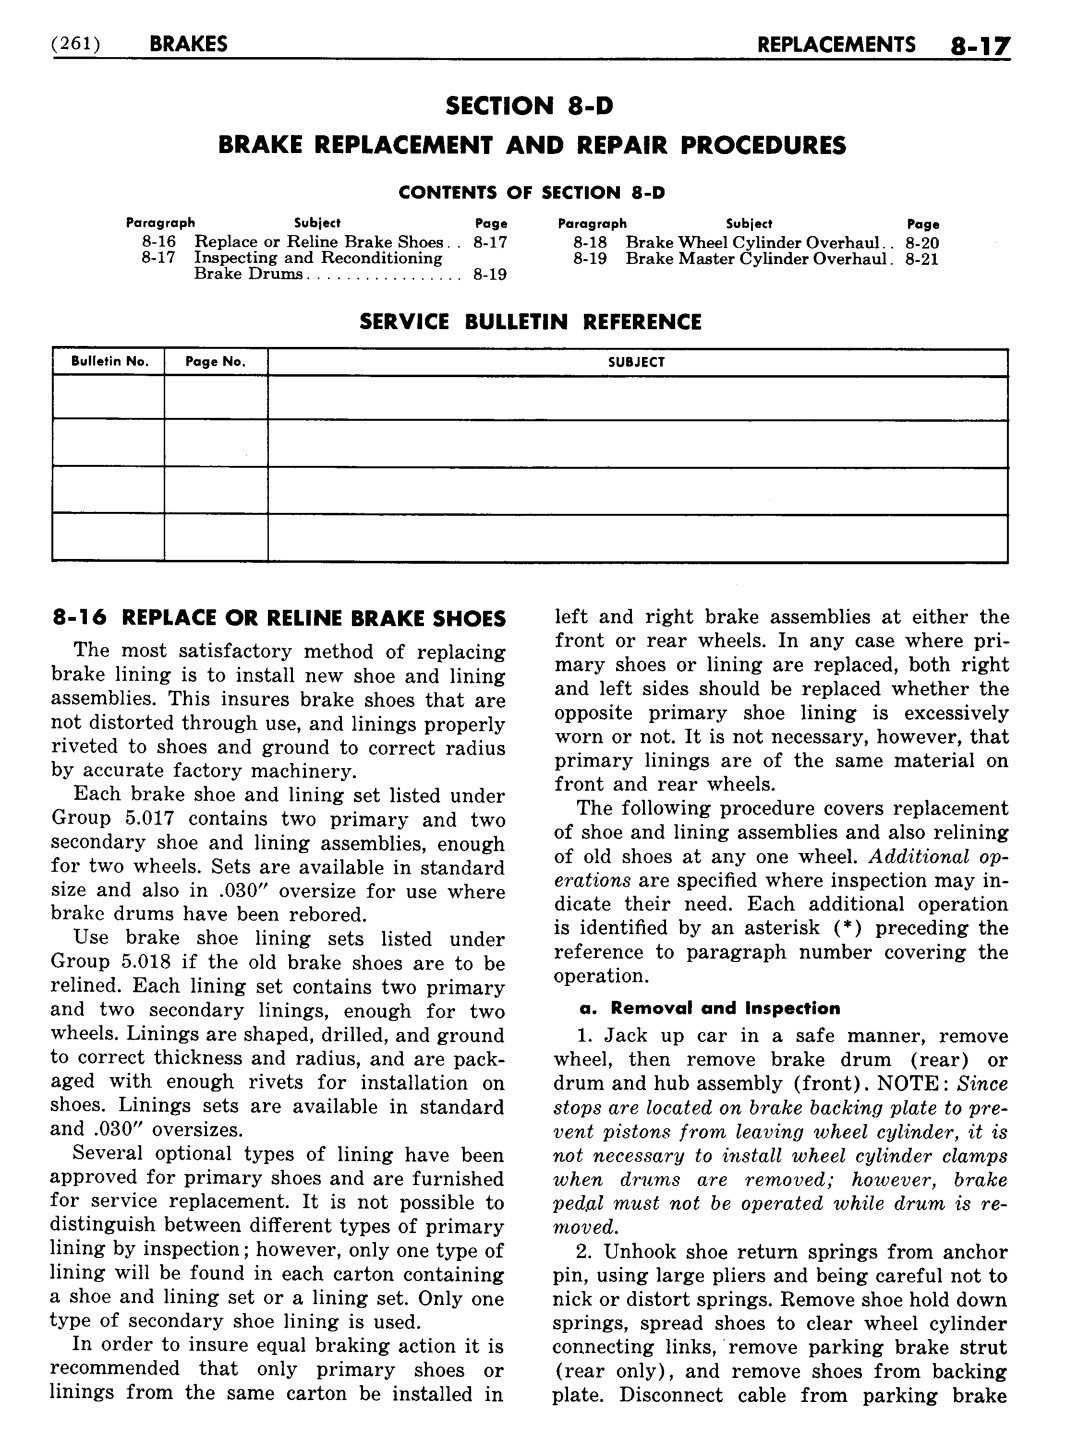 n_09 1948 Buick Shop Manual - Brakes-017-017.jpg